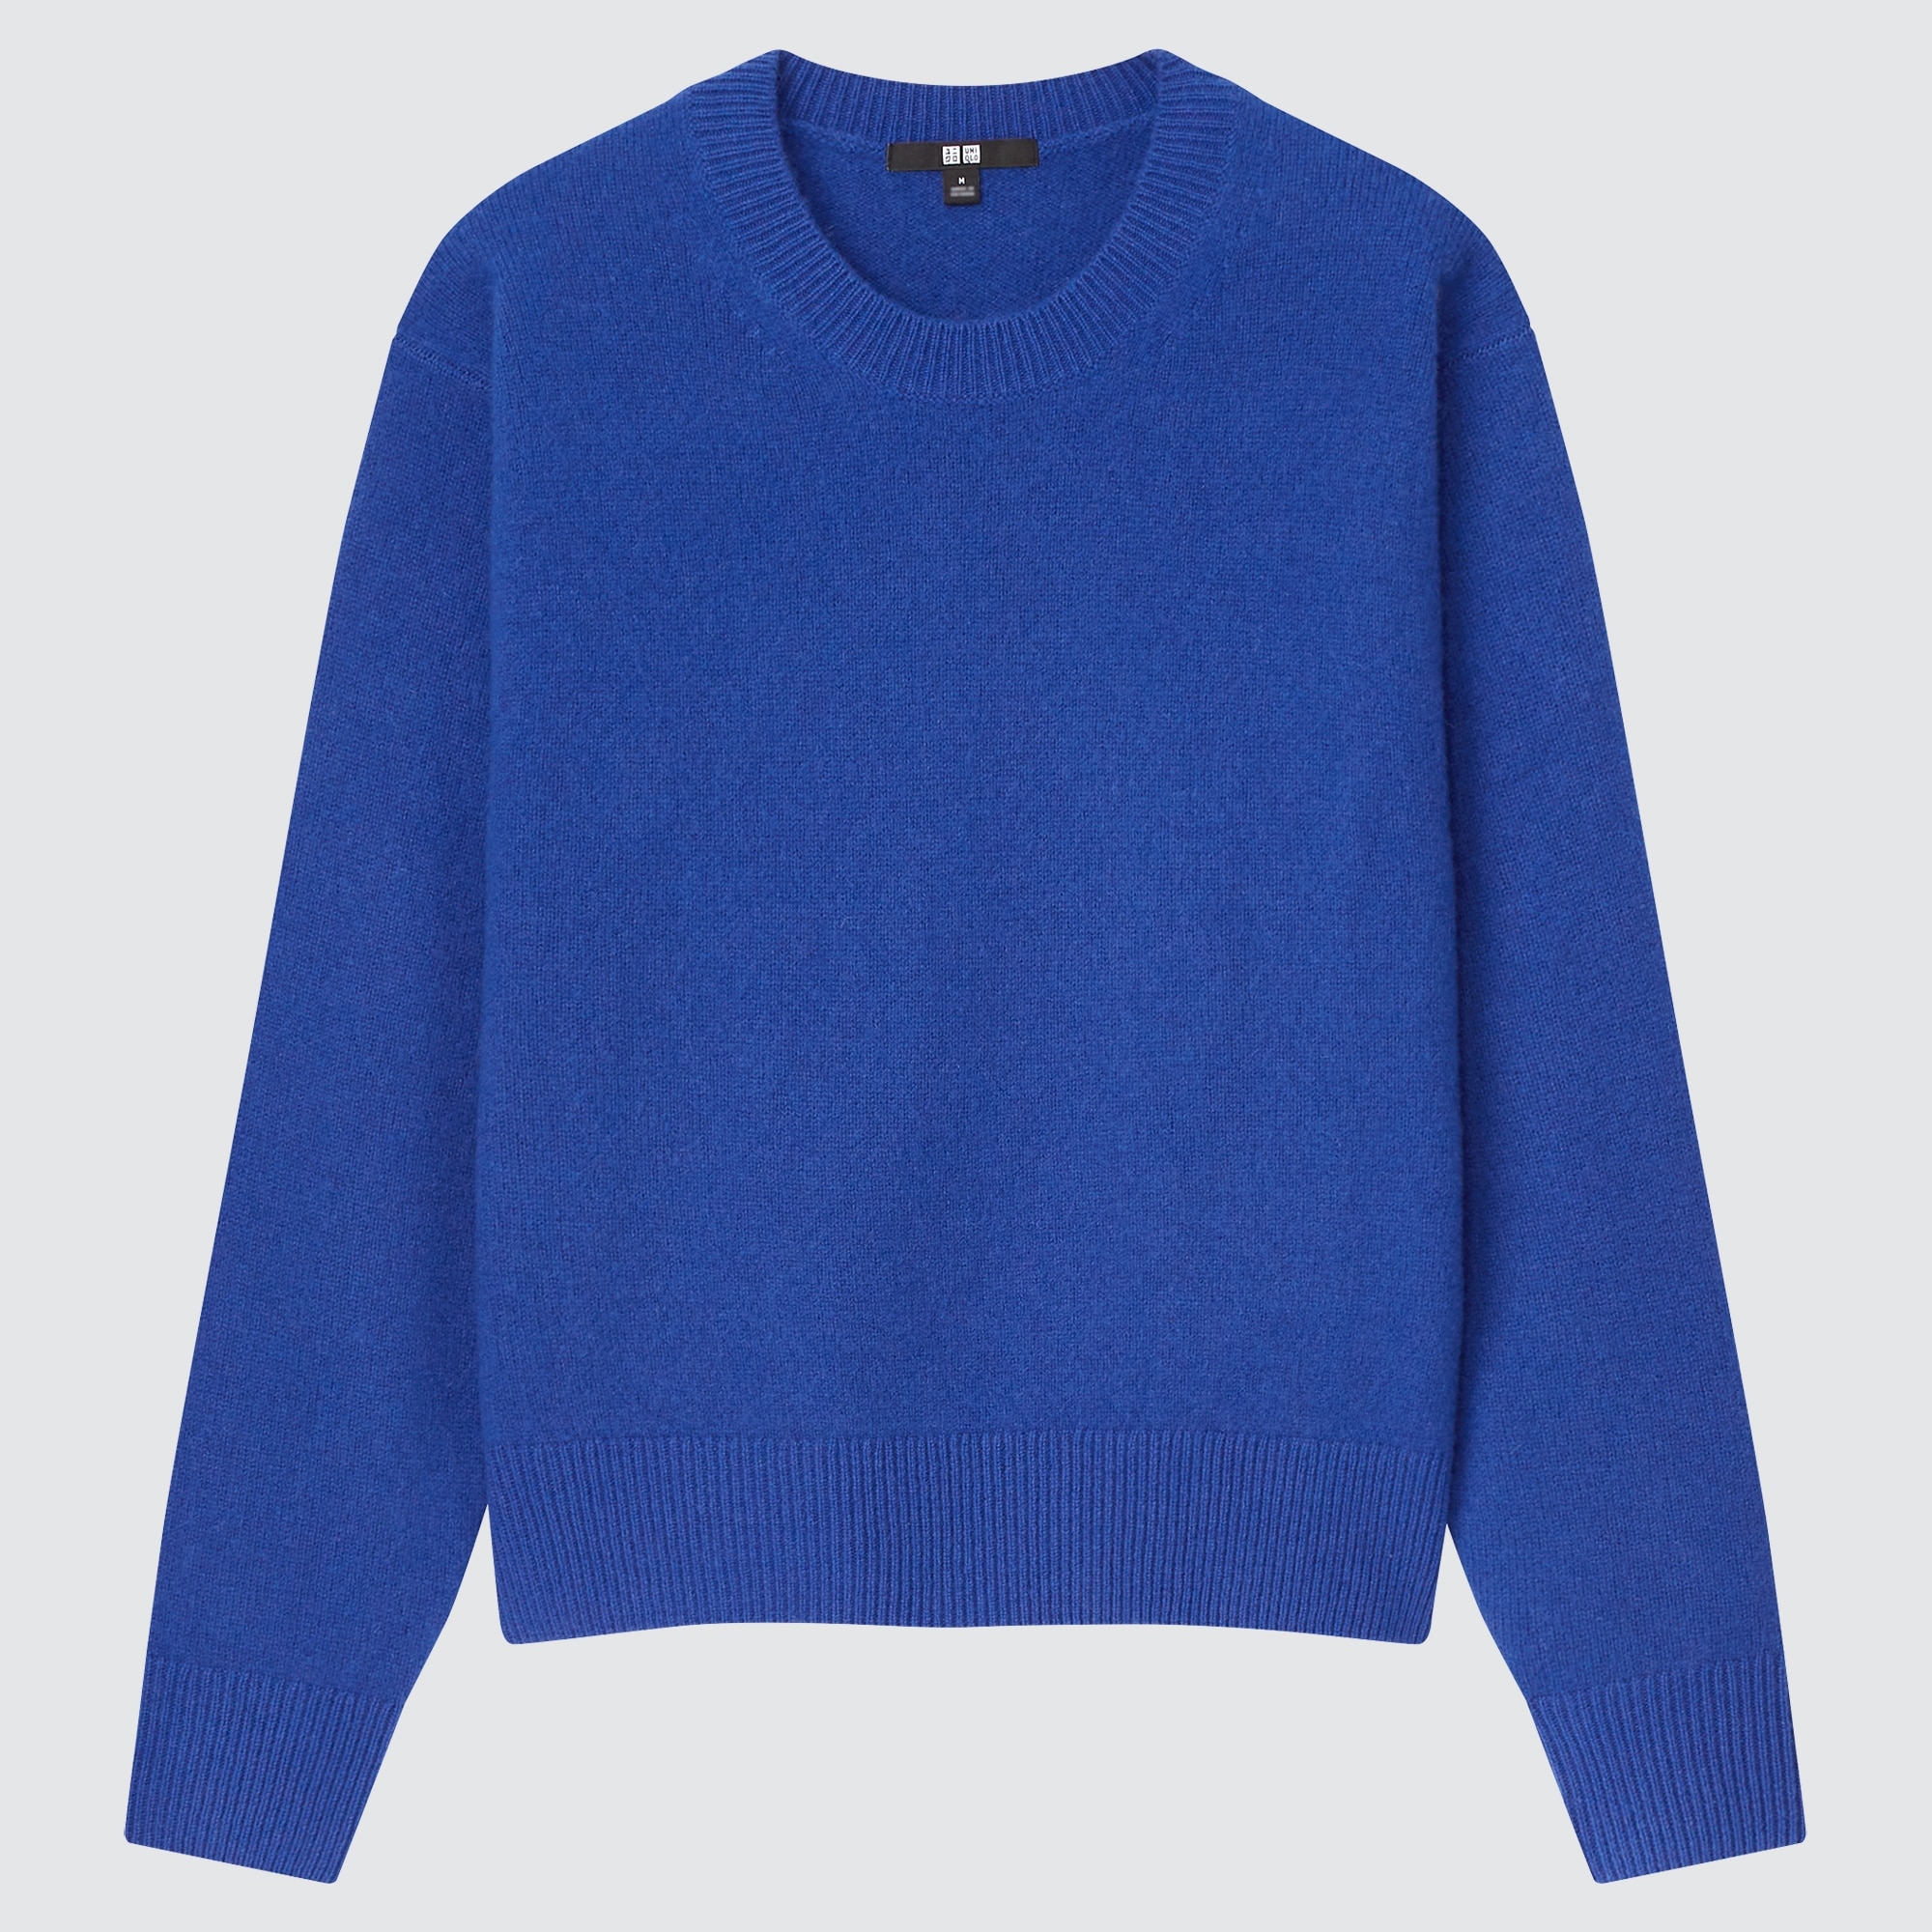 Uniqlo WomensMens Sweaters  Premium Lambswool Crew Neck LongSleeve  Sweater BLUE  Moticommodity